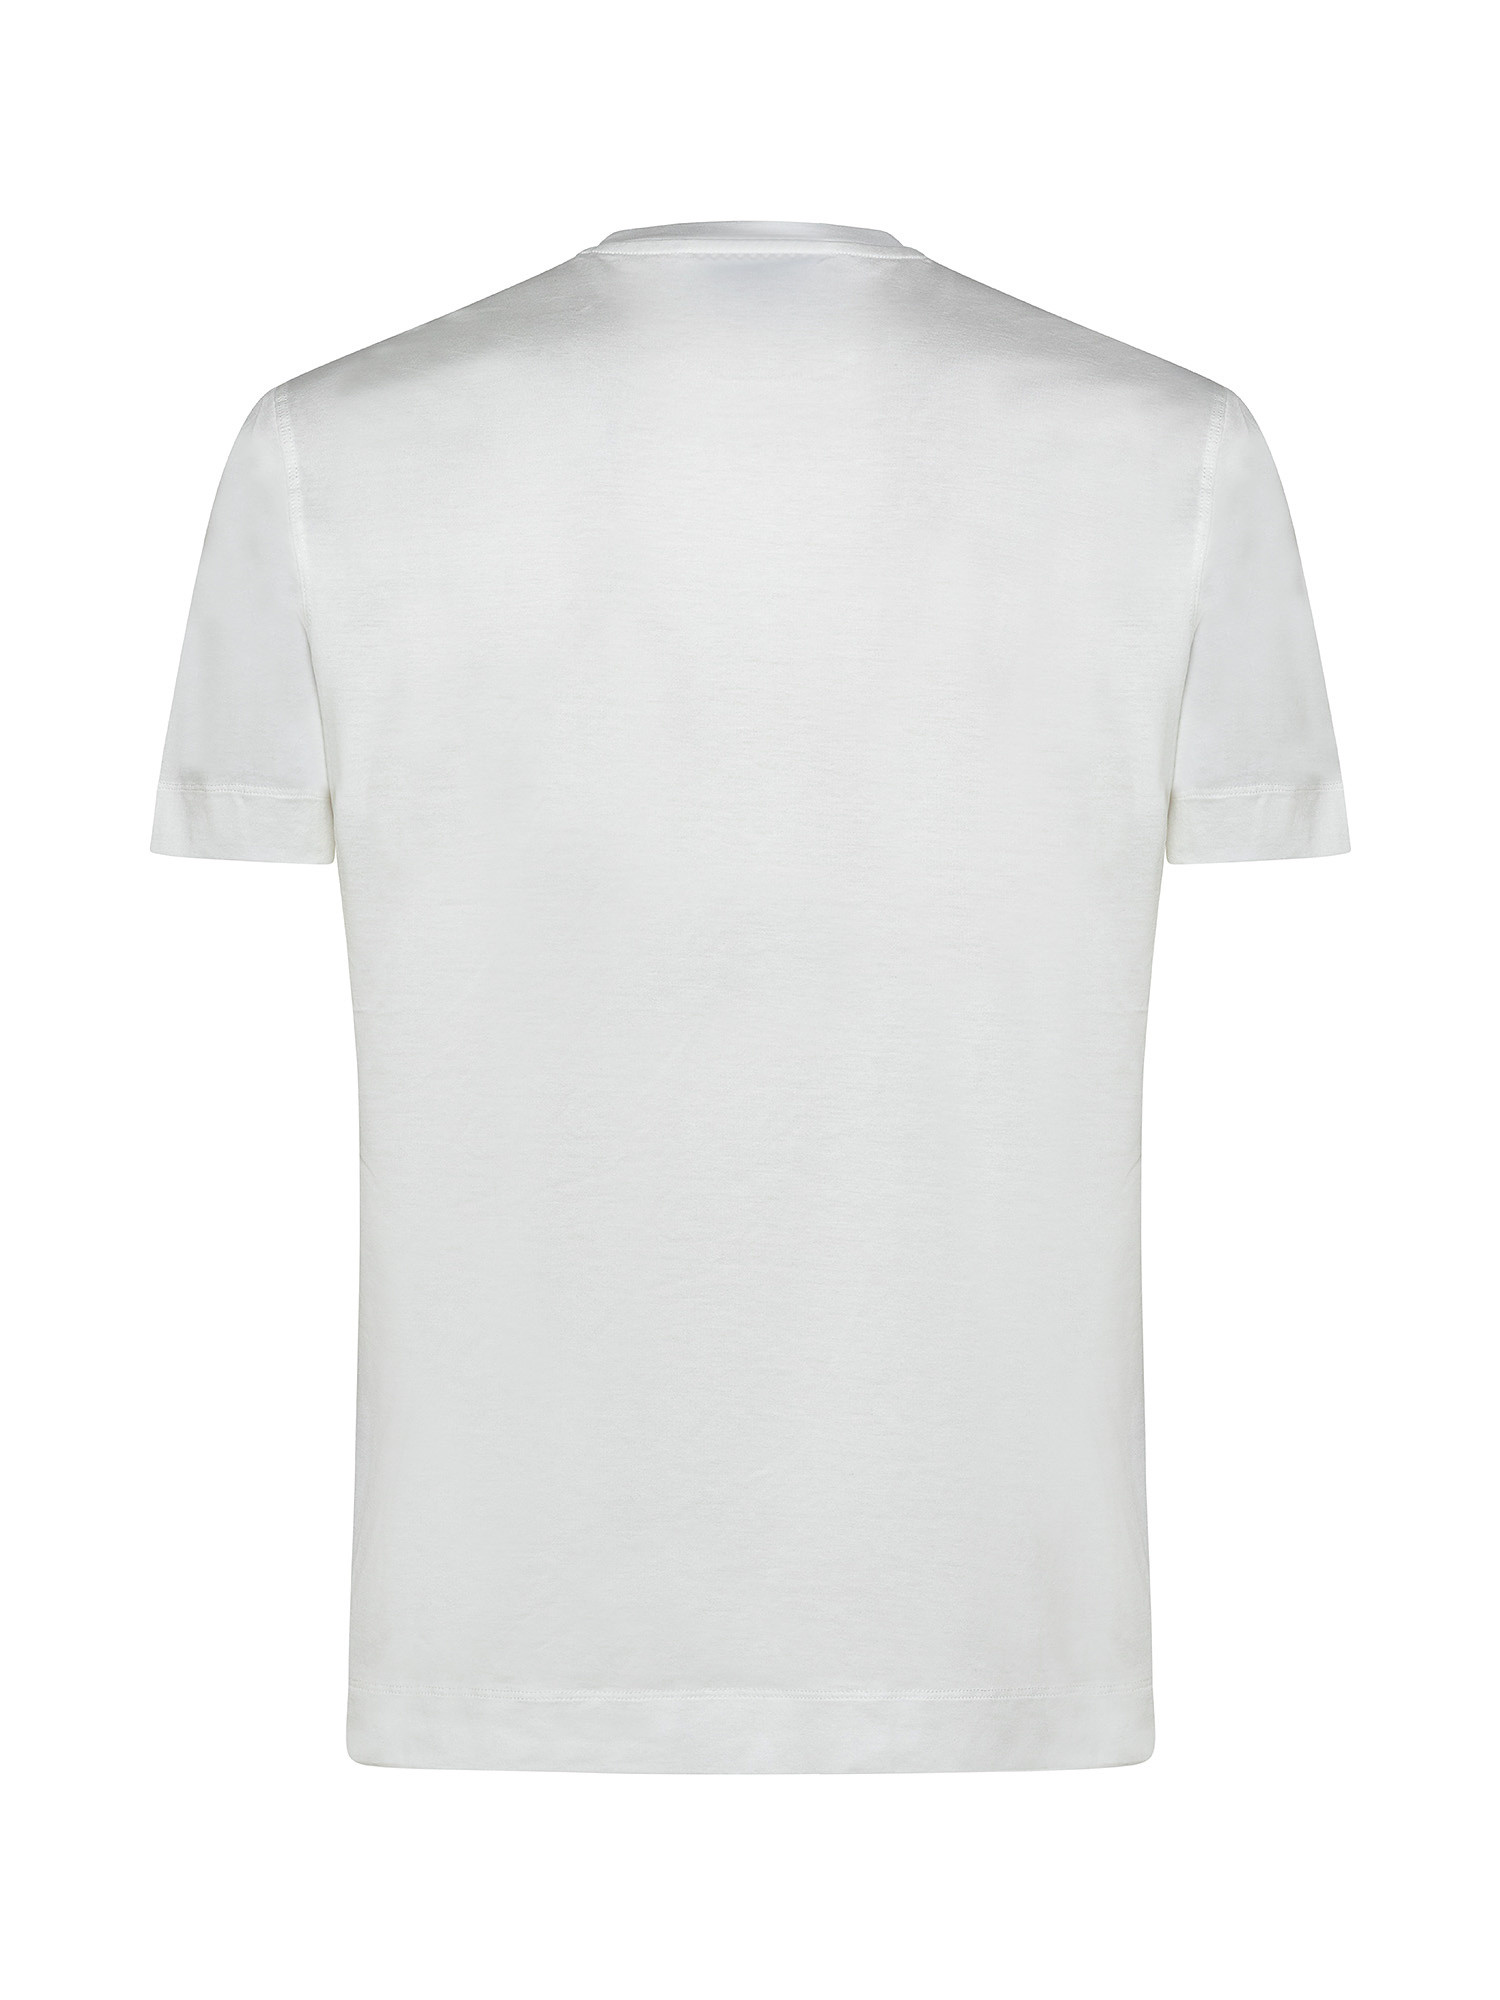 Logo t-shirt, White, large image number 1